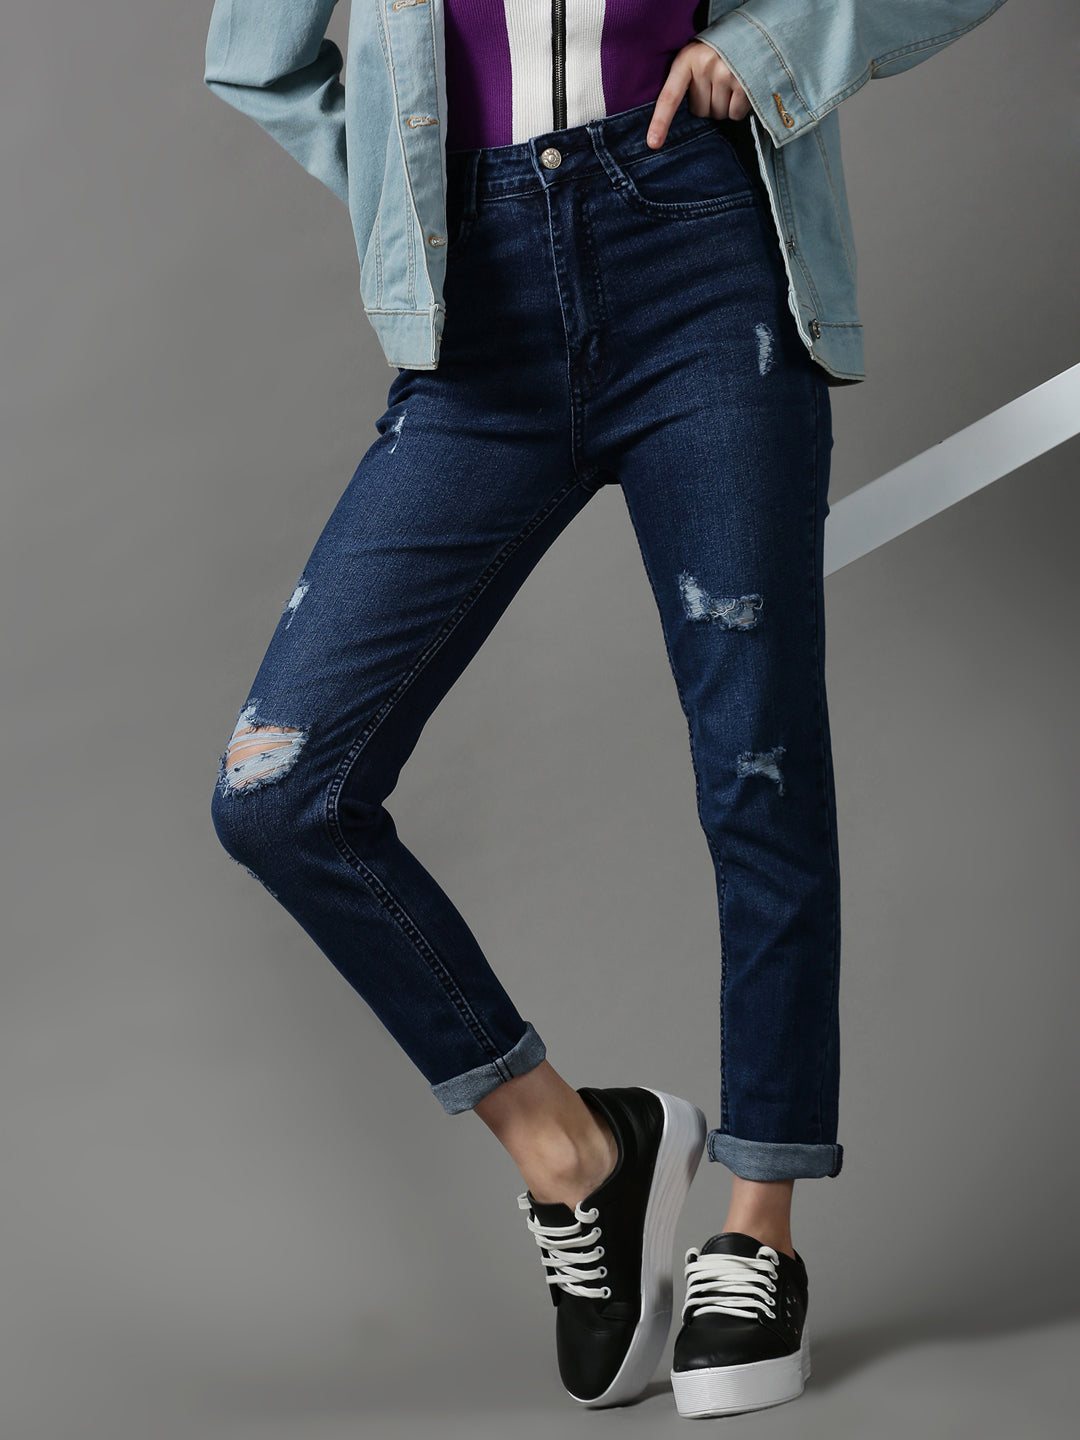 Women's Navy Blue Solid Slim Fit Denim Jeans